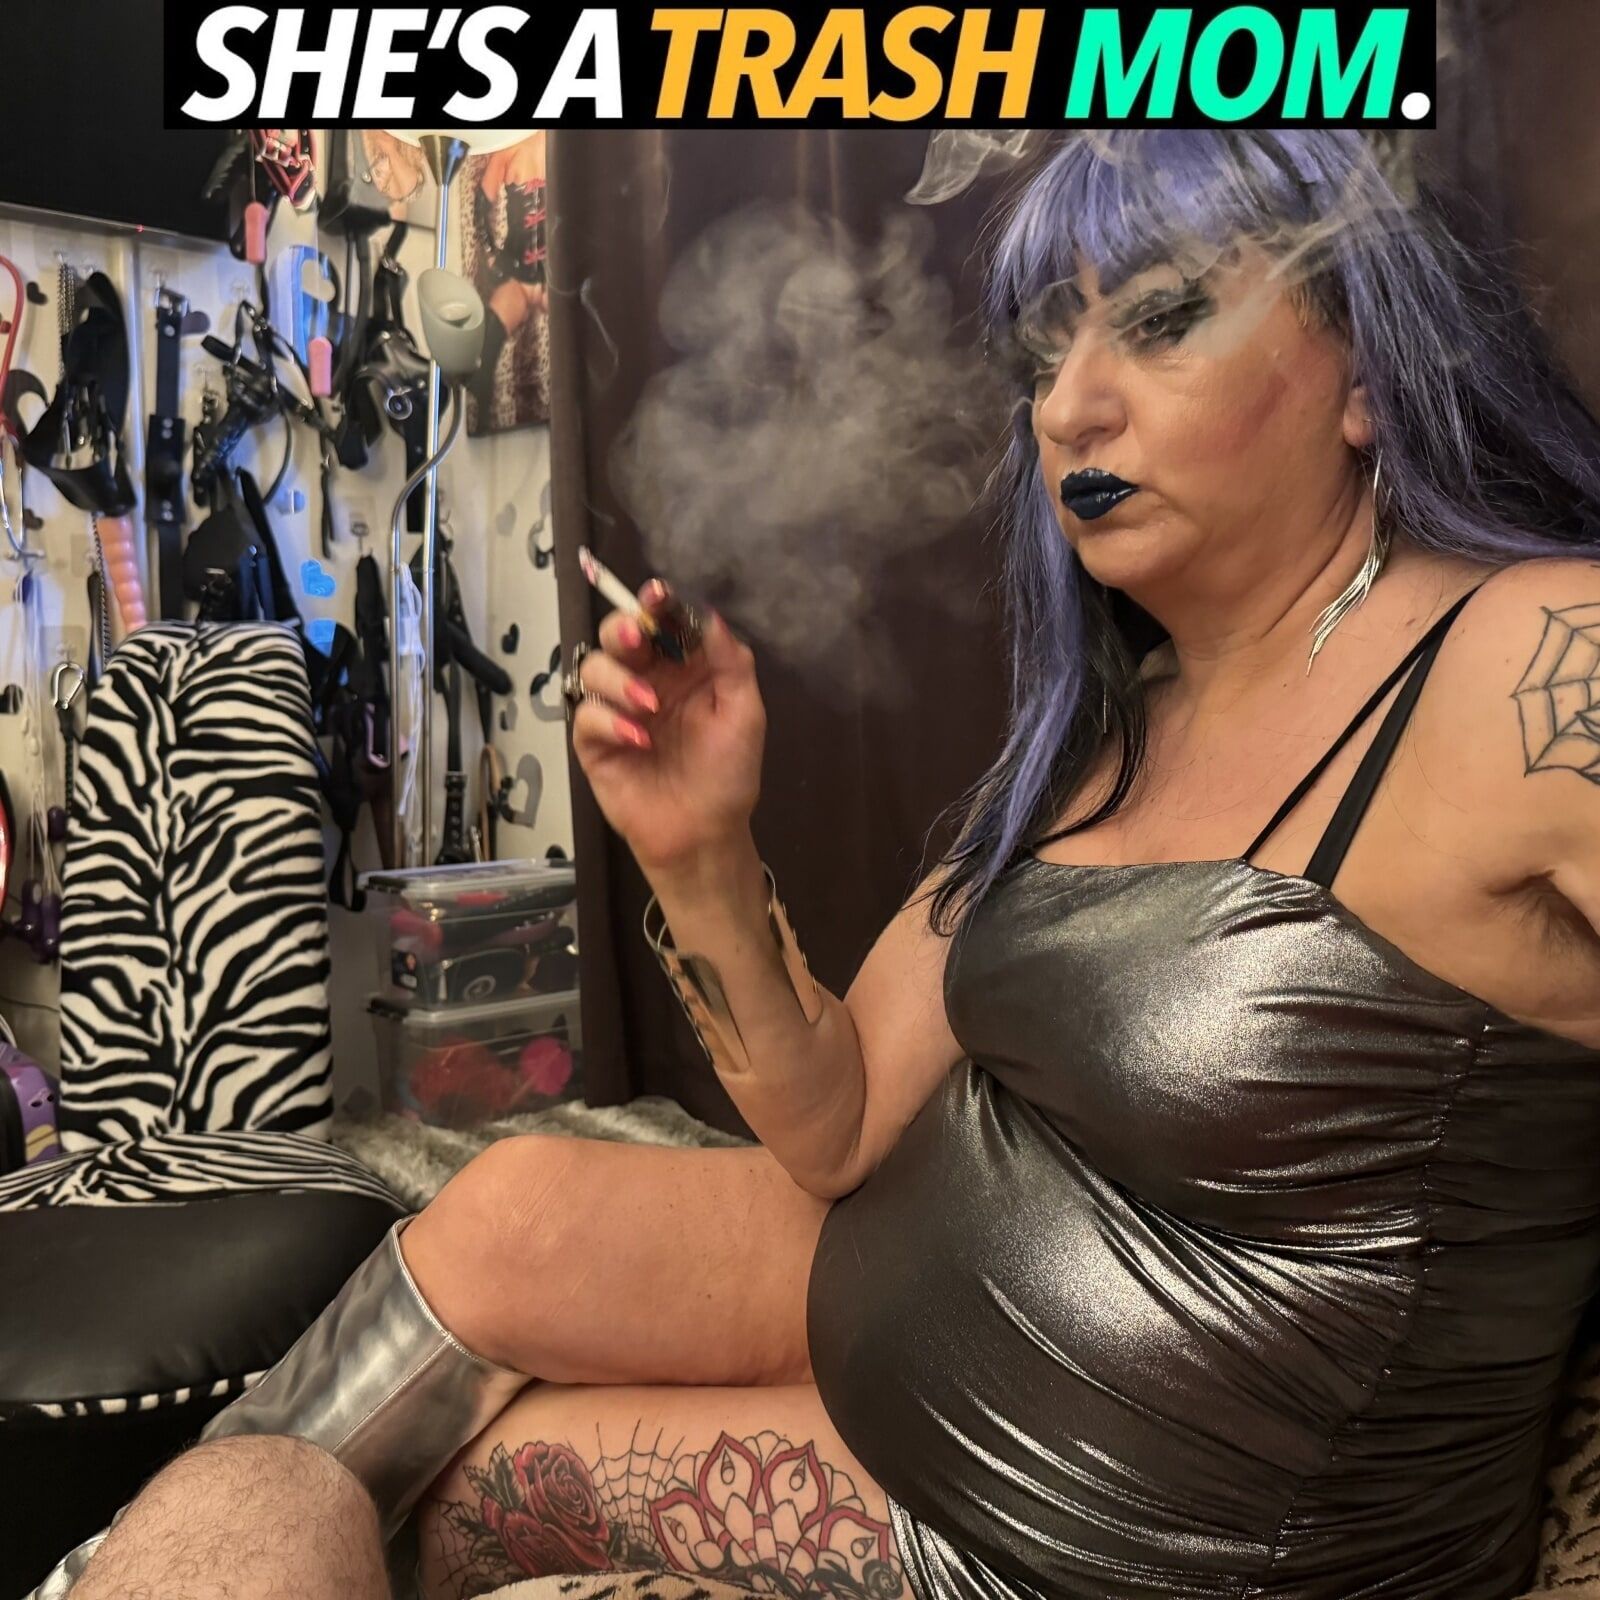 SHIRLEY TRASH MOM #38